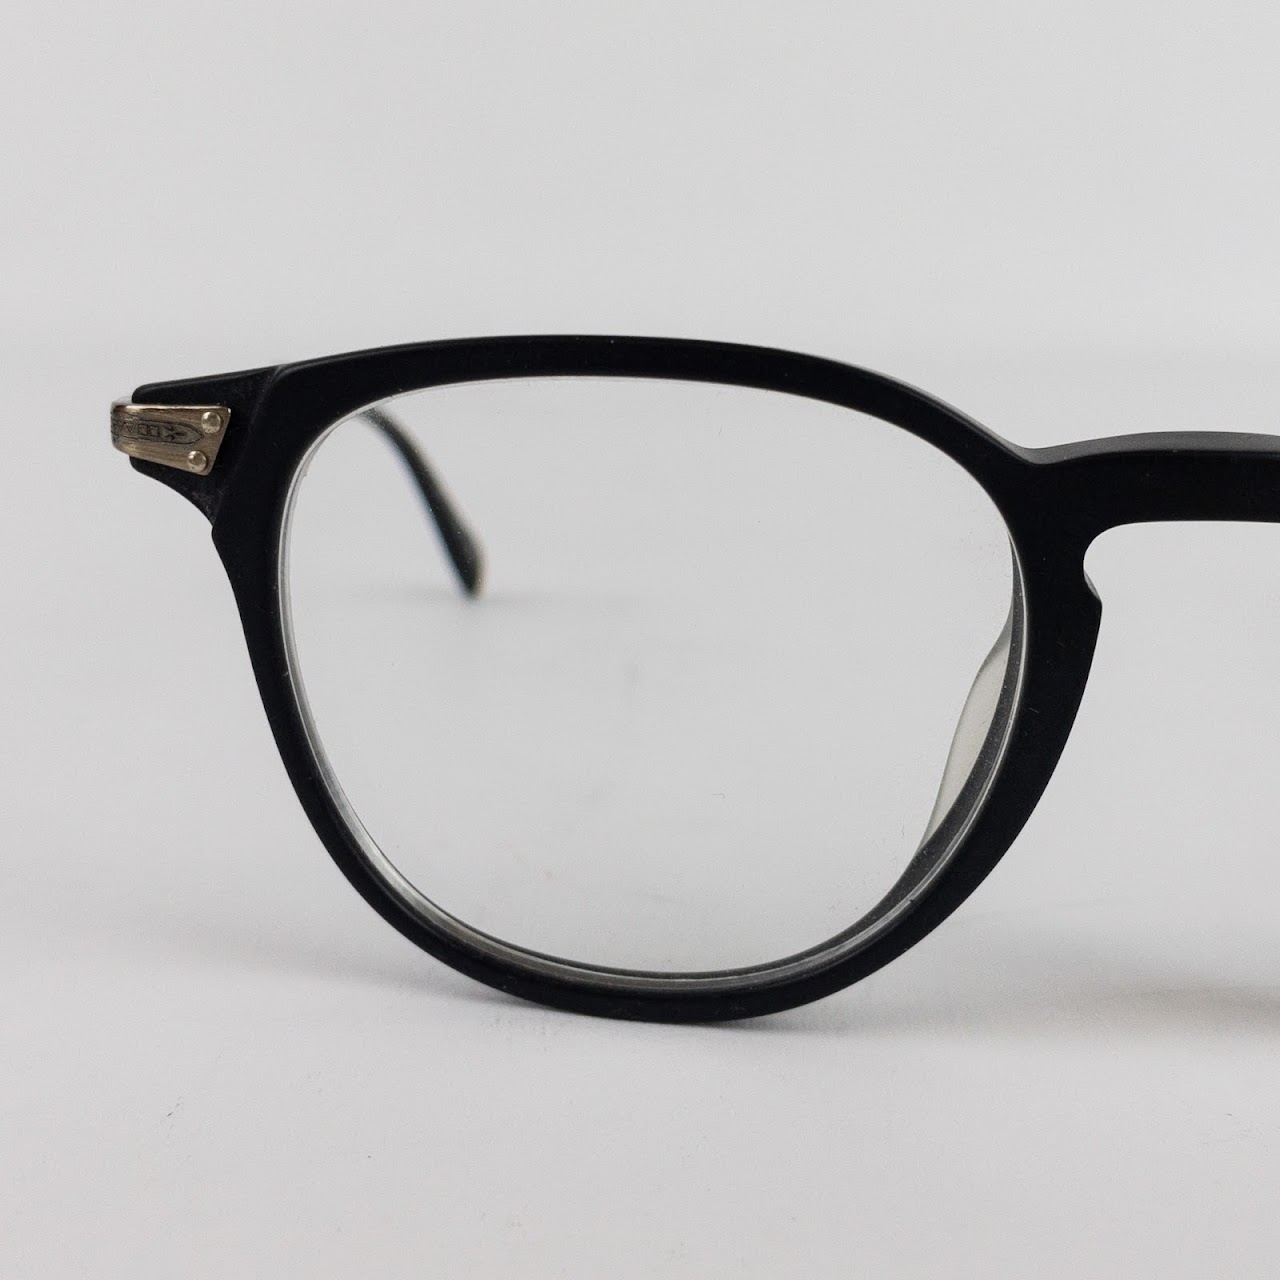 Oliver Peoples Ennis RX Eyeglasses  Black